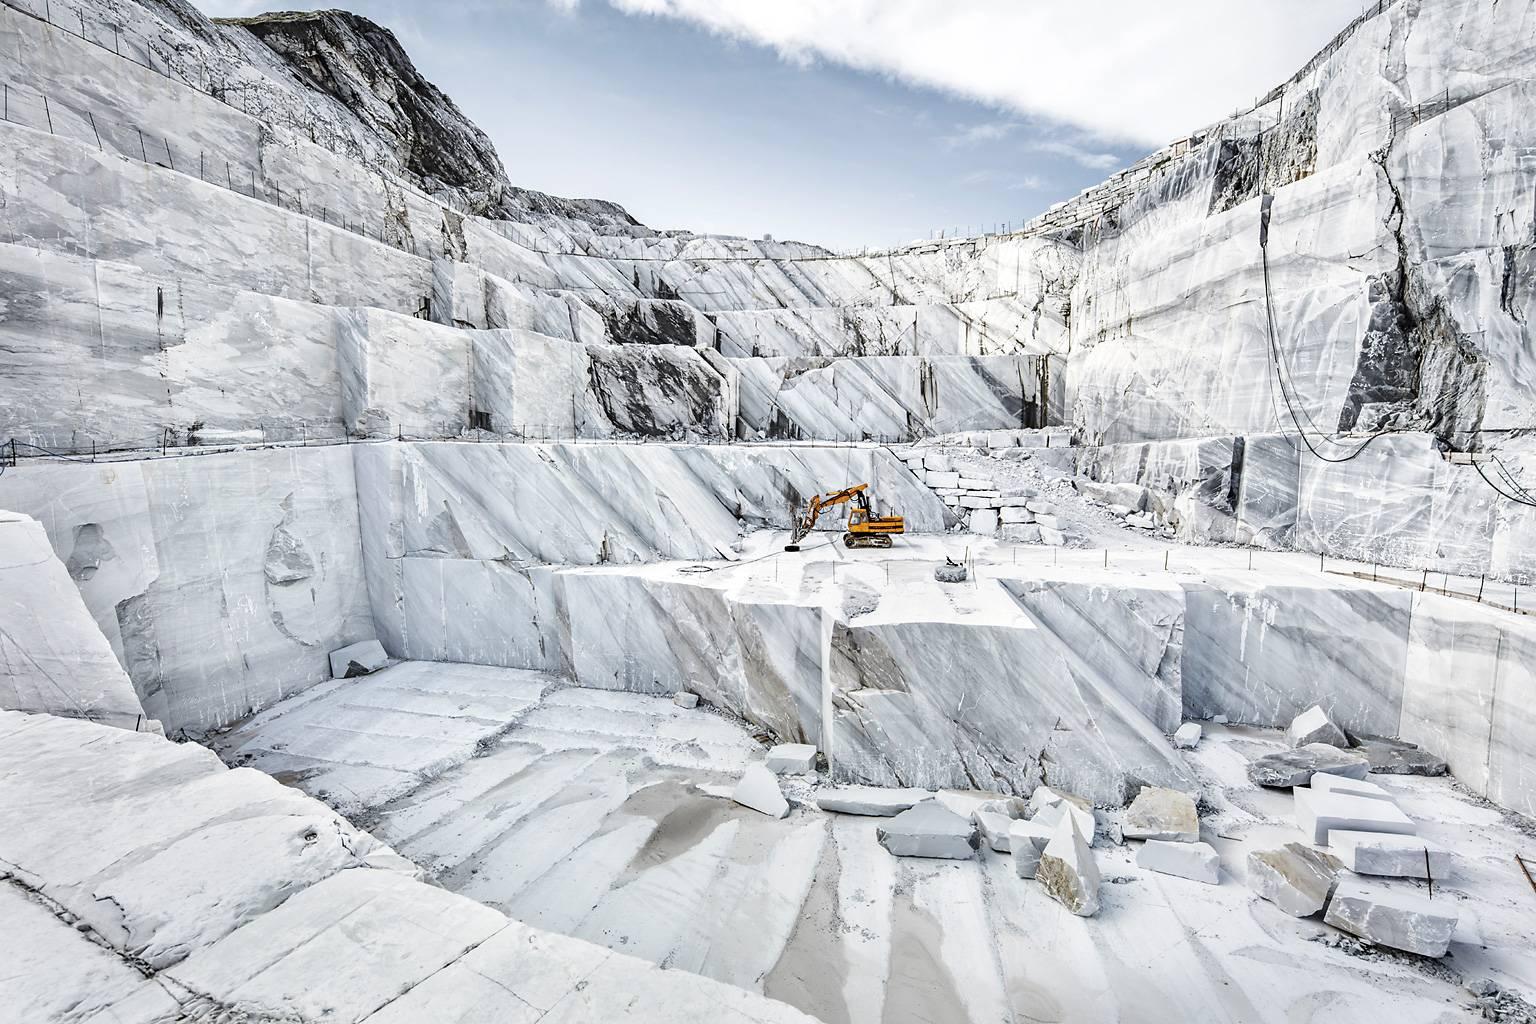 Marmo di Carrara (framed) - large format photograph of Italian marble quarry